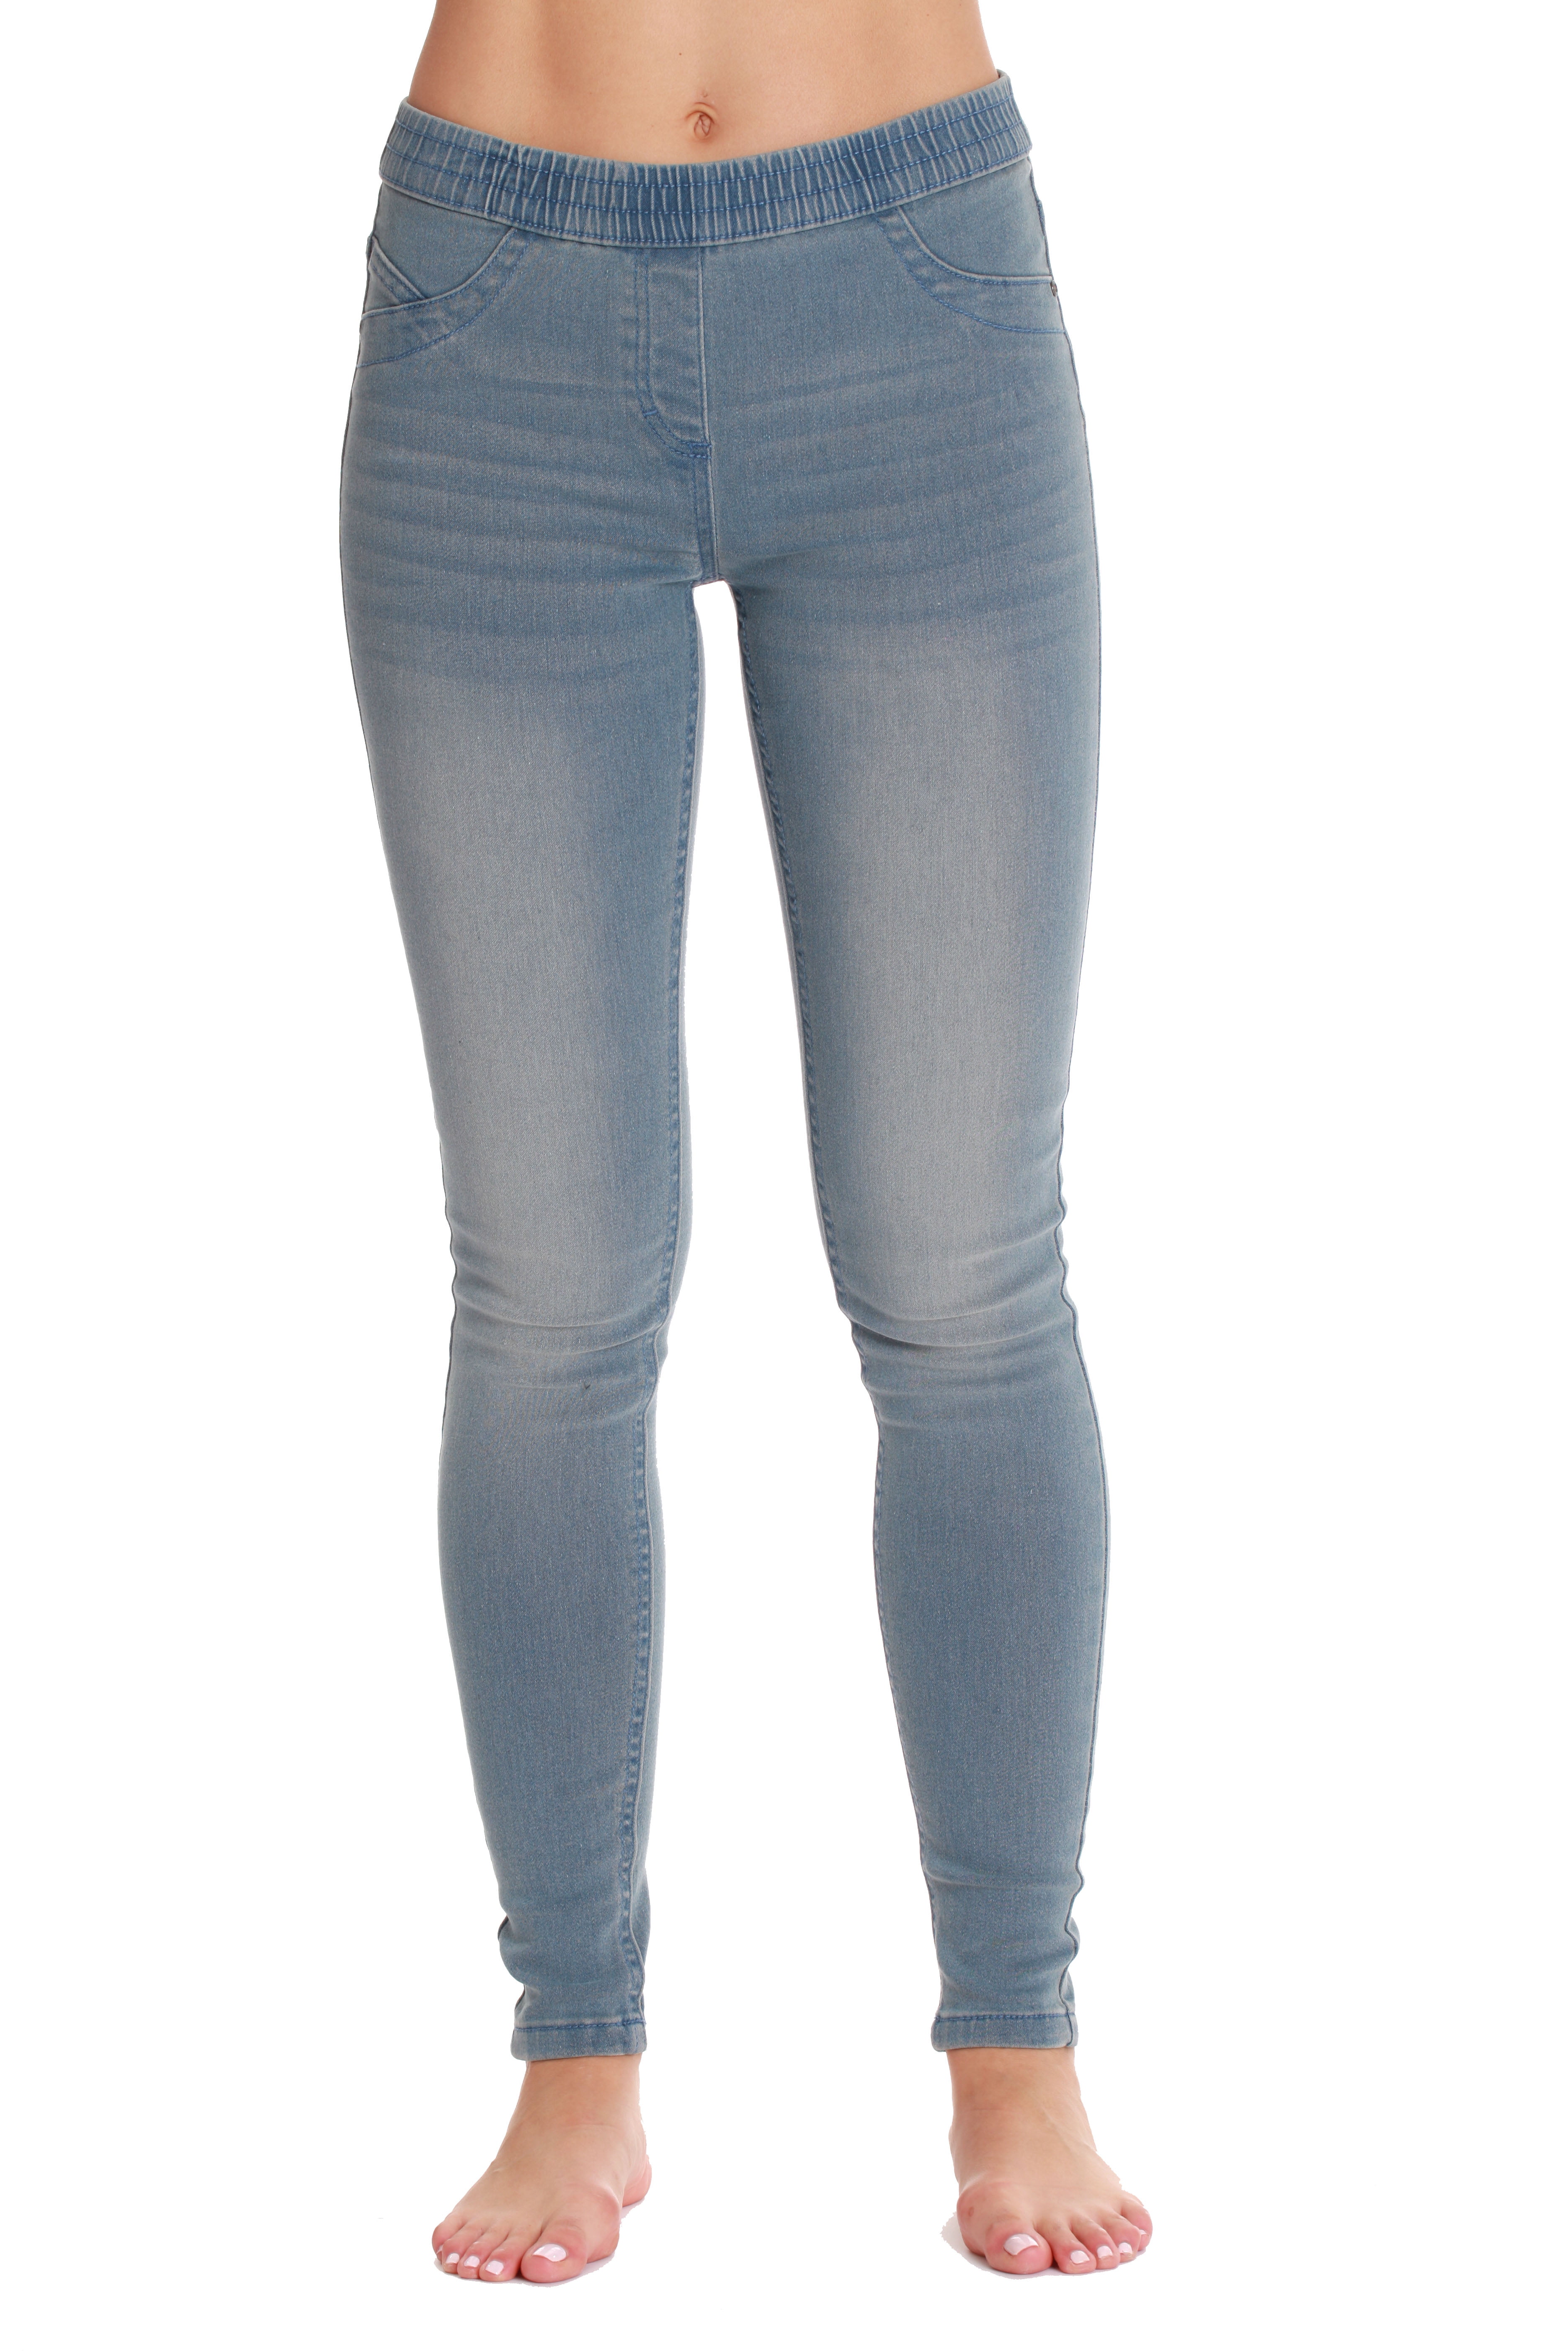 Just Love Women's Denim Jeggings with Pockets - Comfortable Stretch Jeans  Leggings (Light Blue Denim, Small)